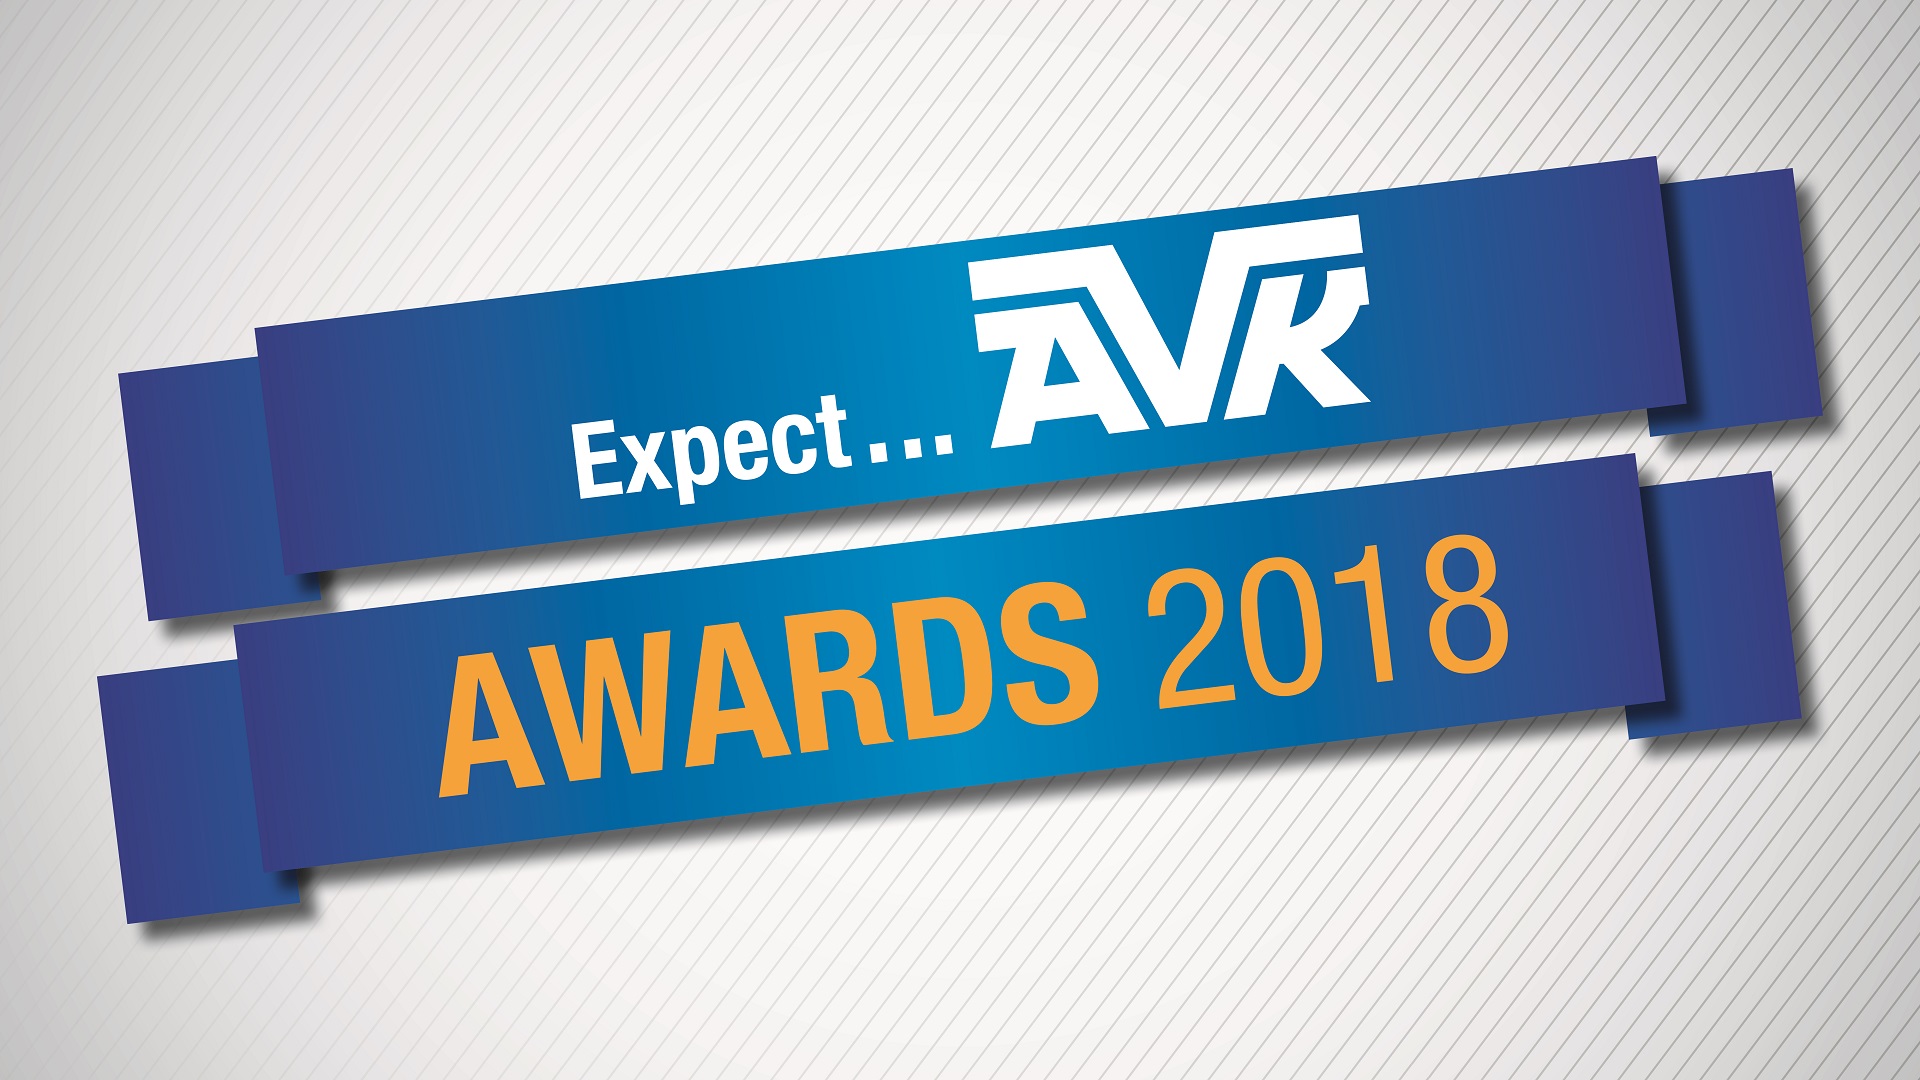 AVK Expect Award 2019 winners announced